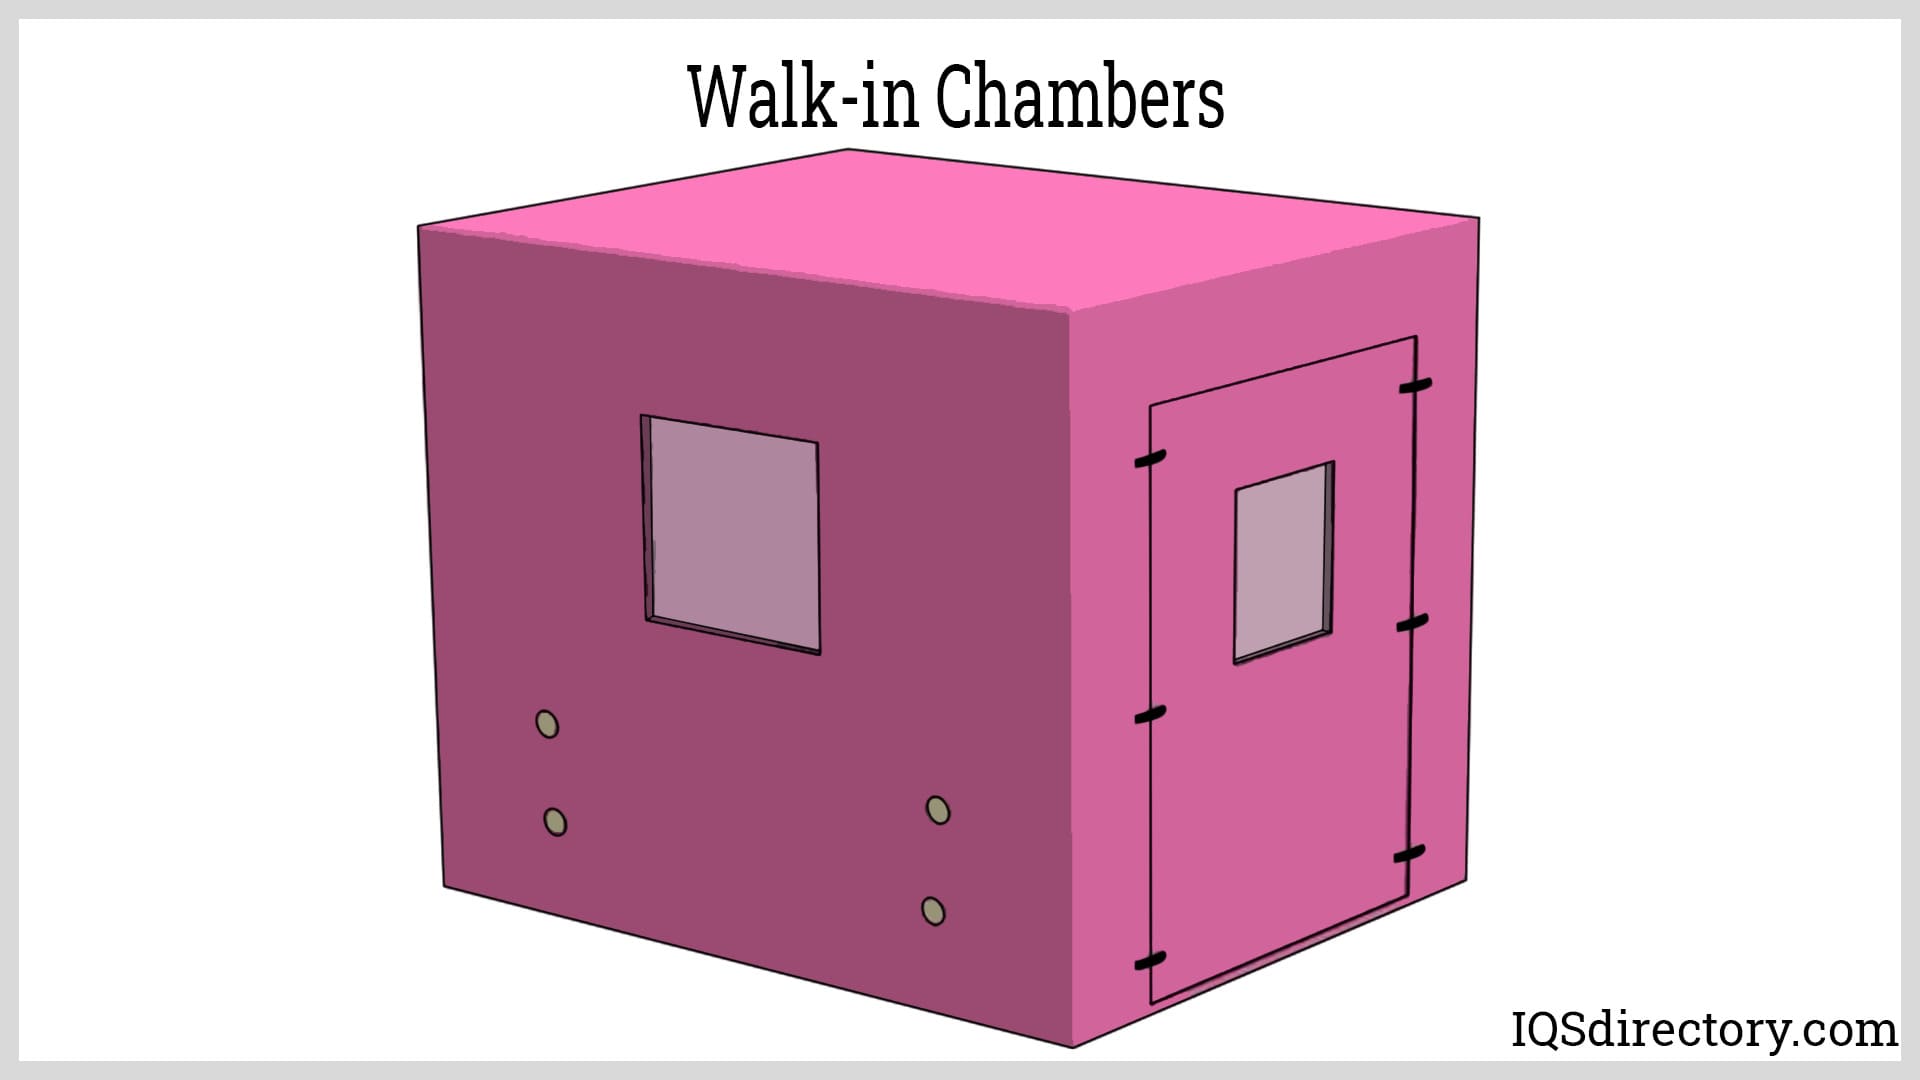 Walk-in Chambers